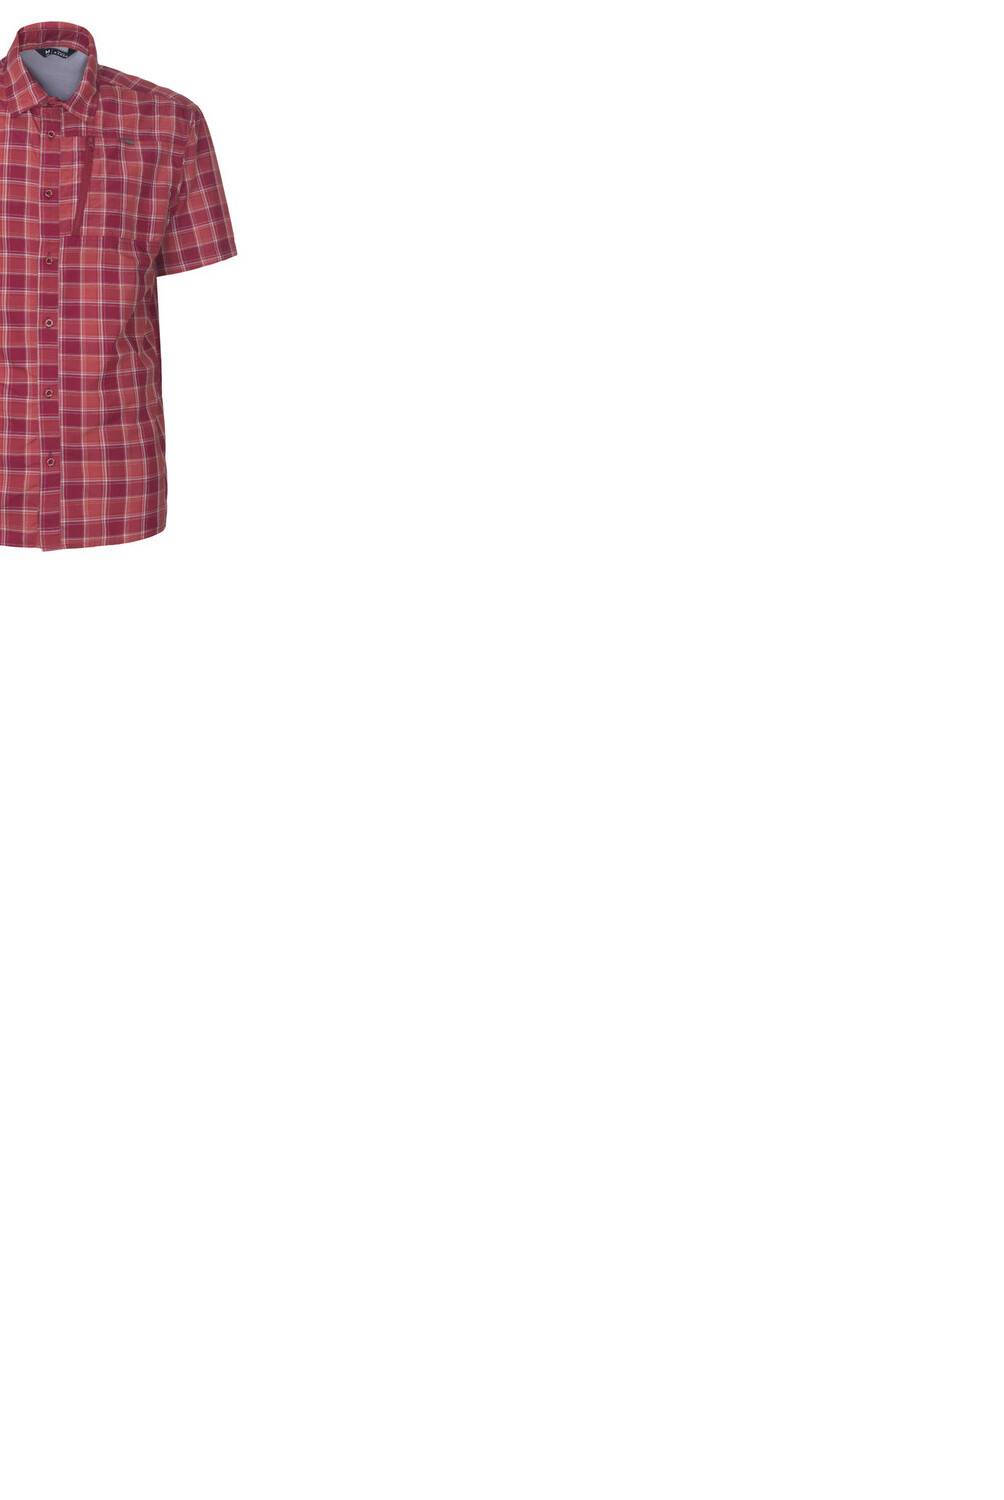 KANNU - Camisa Estampada Manga Corta